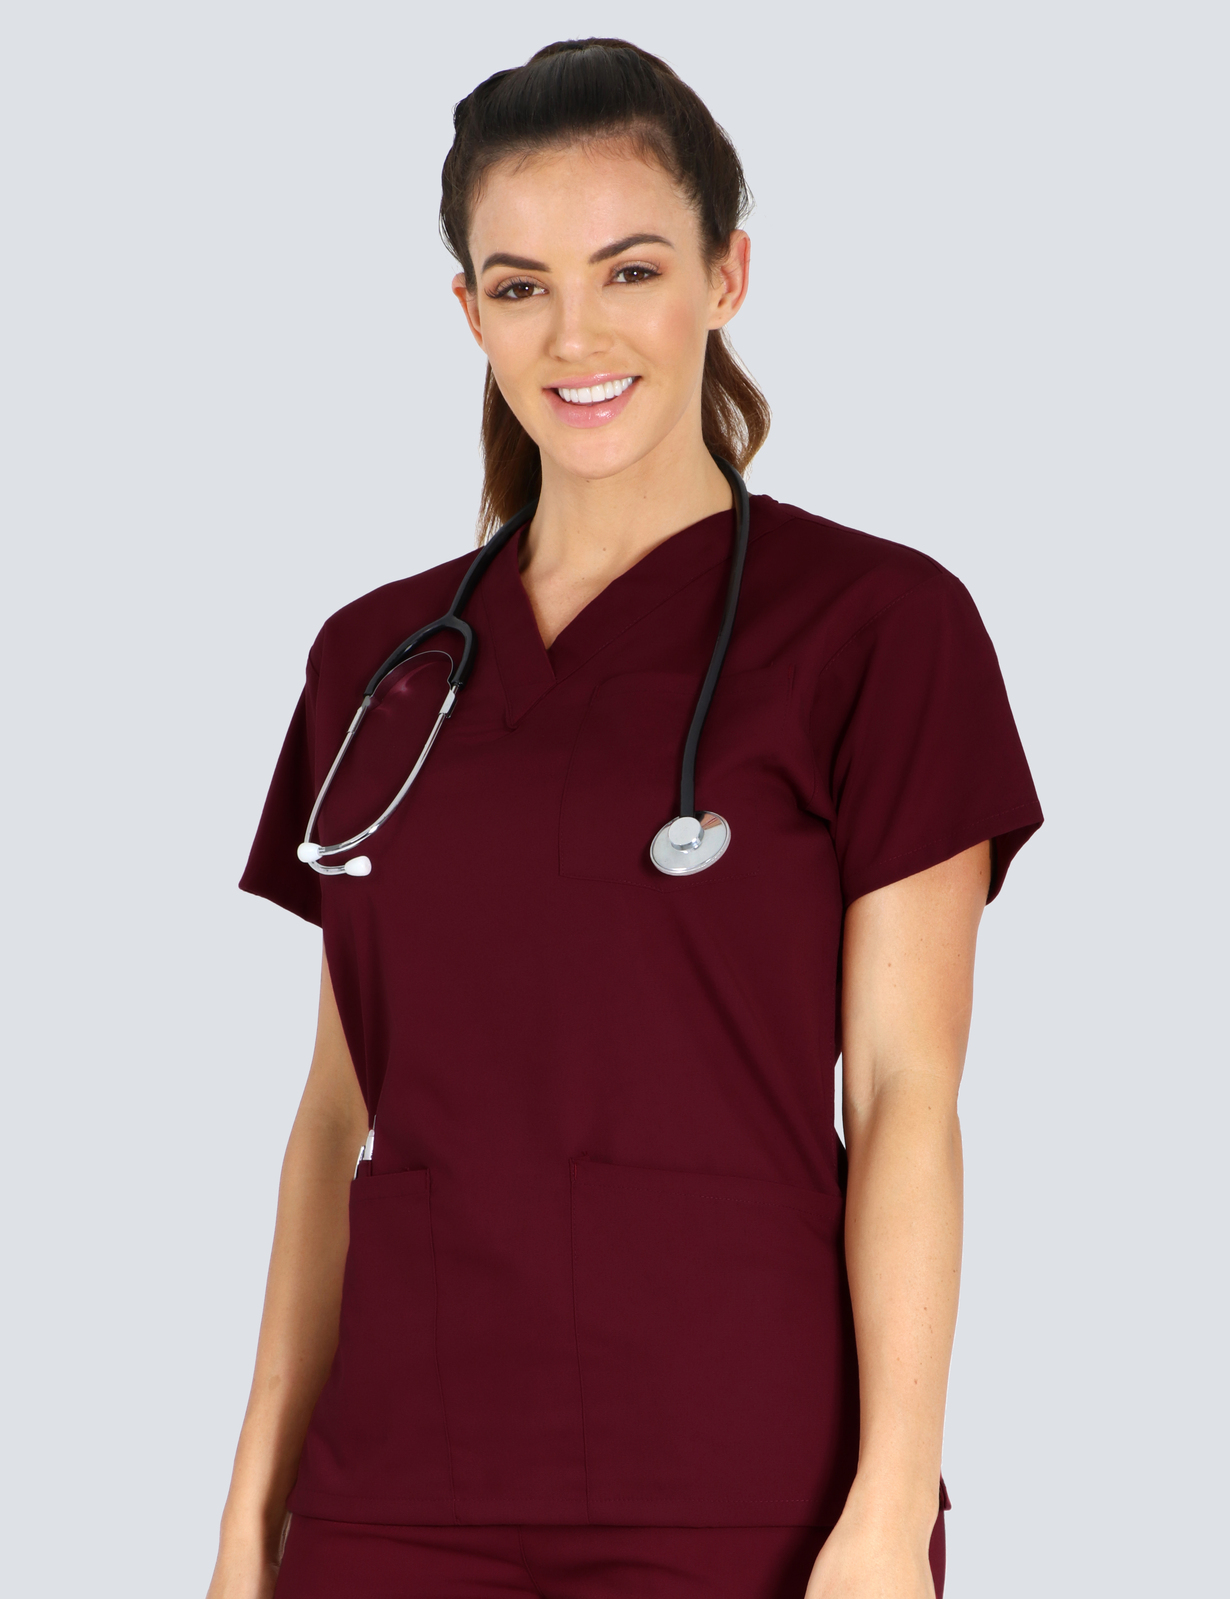 Queensland Children's Hospital Emergency Department Assistant in Nursing  Uniform Top Bundle  (4 Pocket Top in Burgundy incl Logos)